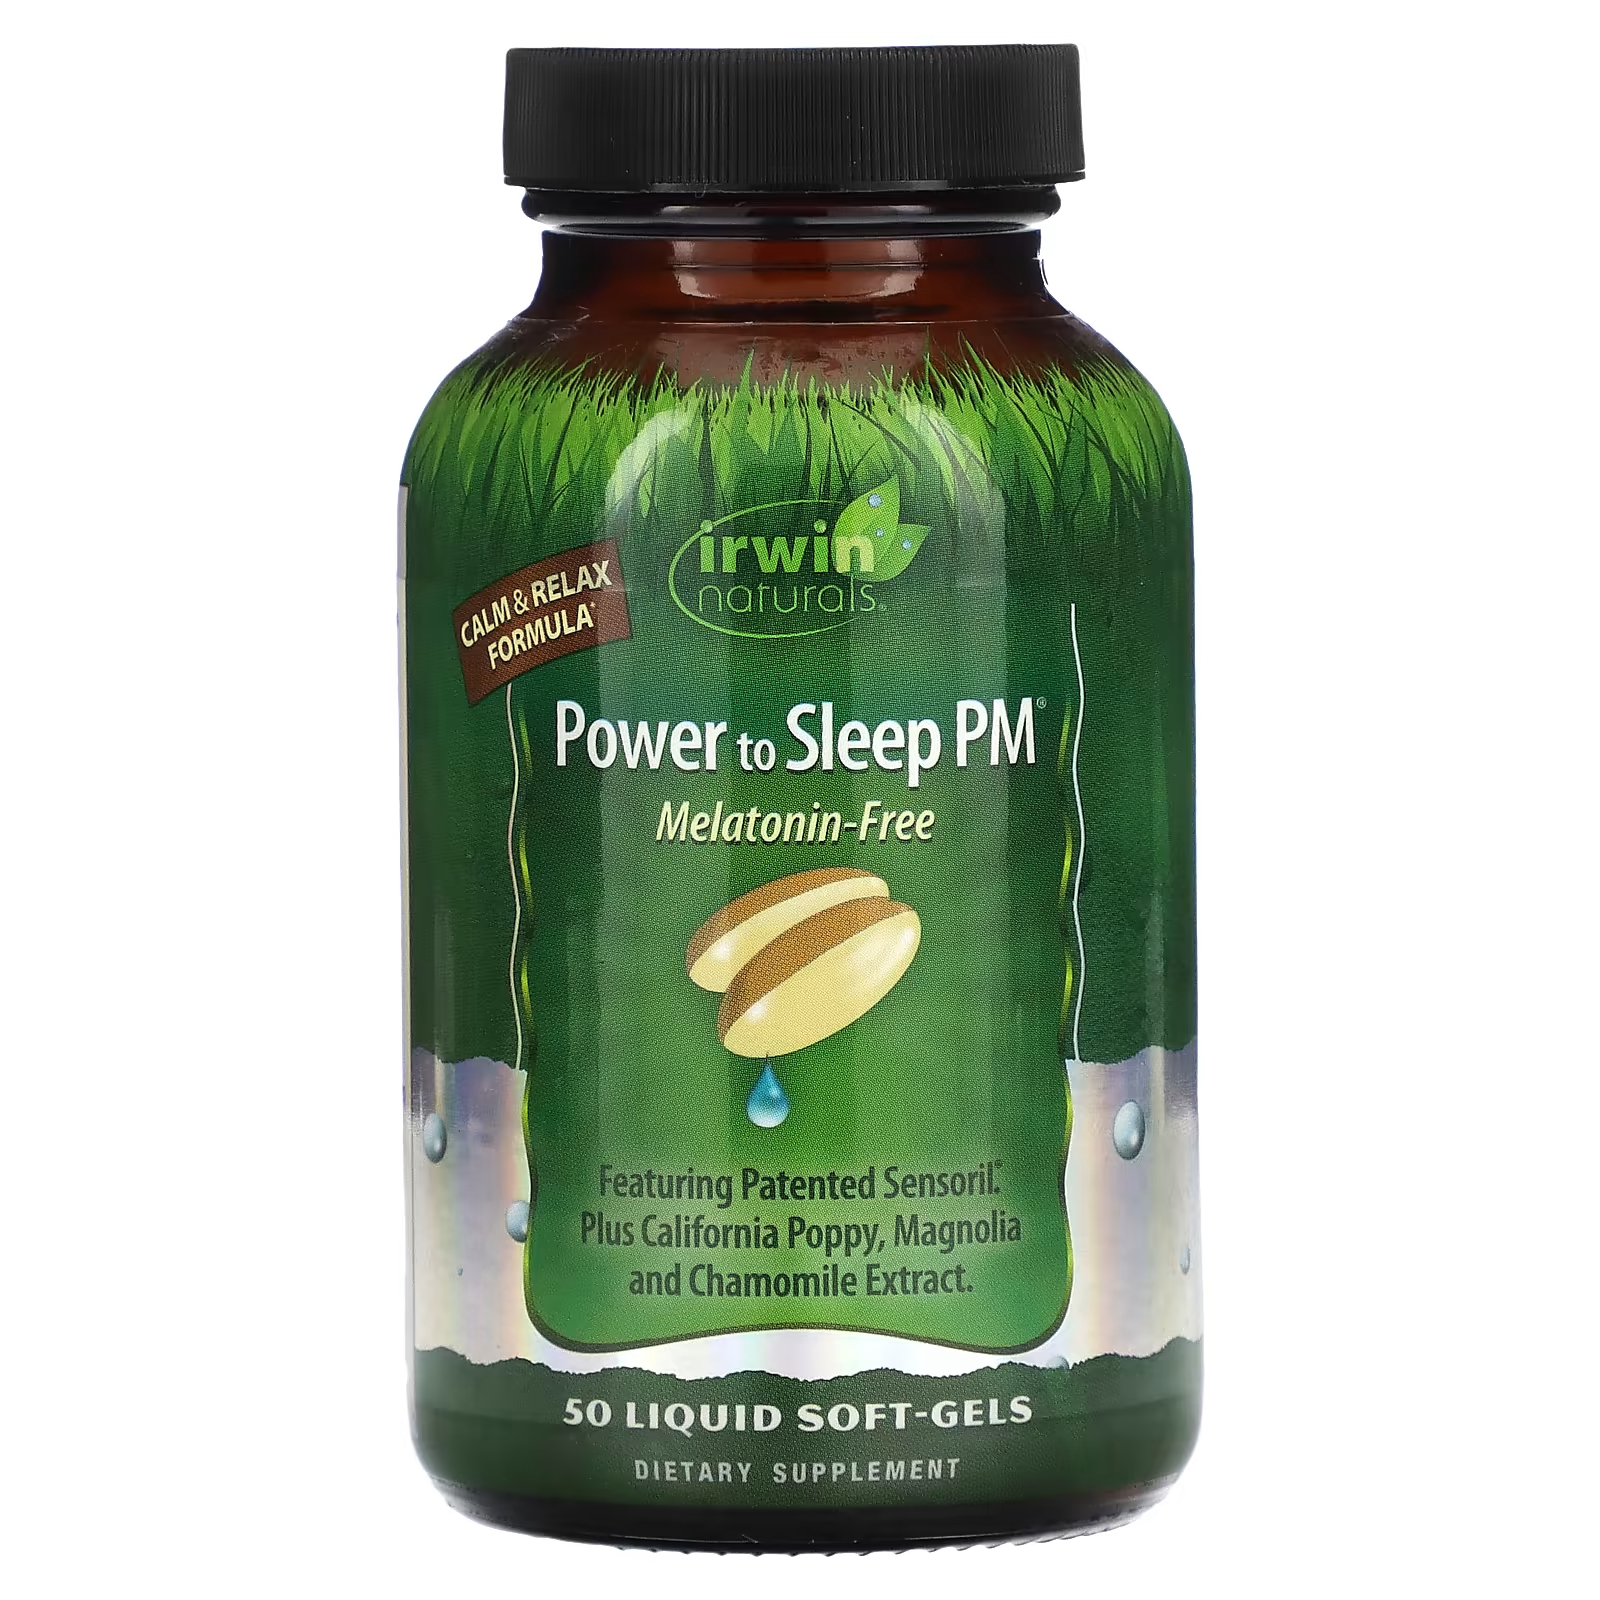 Пищевая добавка Irwin Naturals Power to Sleep PM, 50 мягких капсул с жидкостью пищевая добавка irwin naturals ashwagandha extra strength 60 мягких капсул с жидкостью